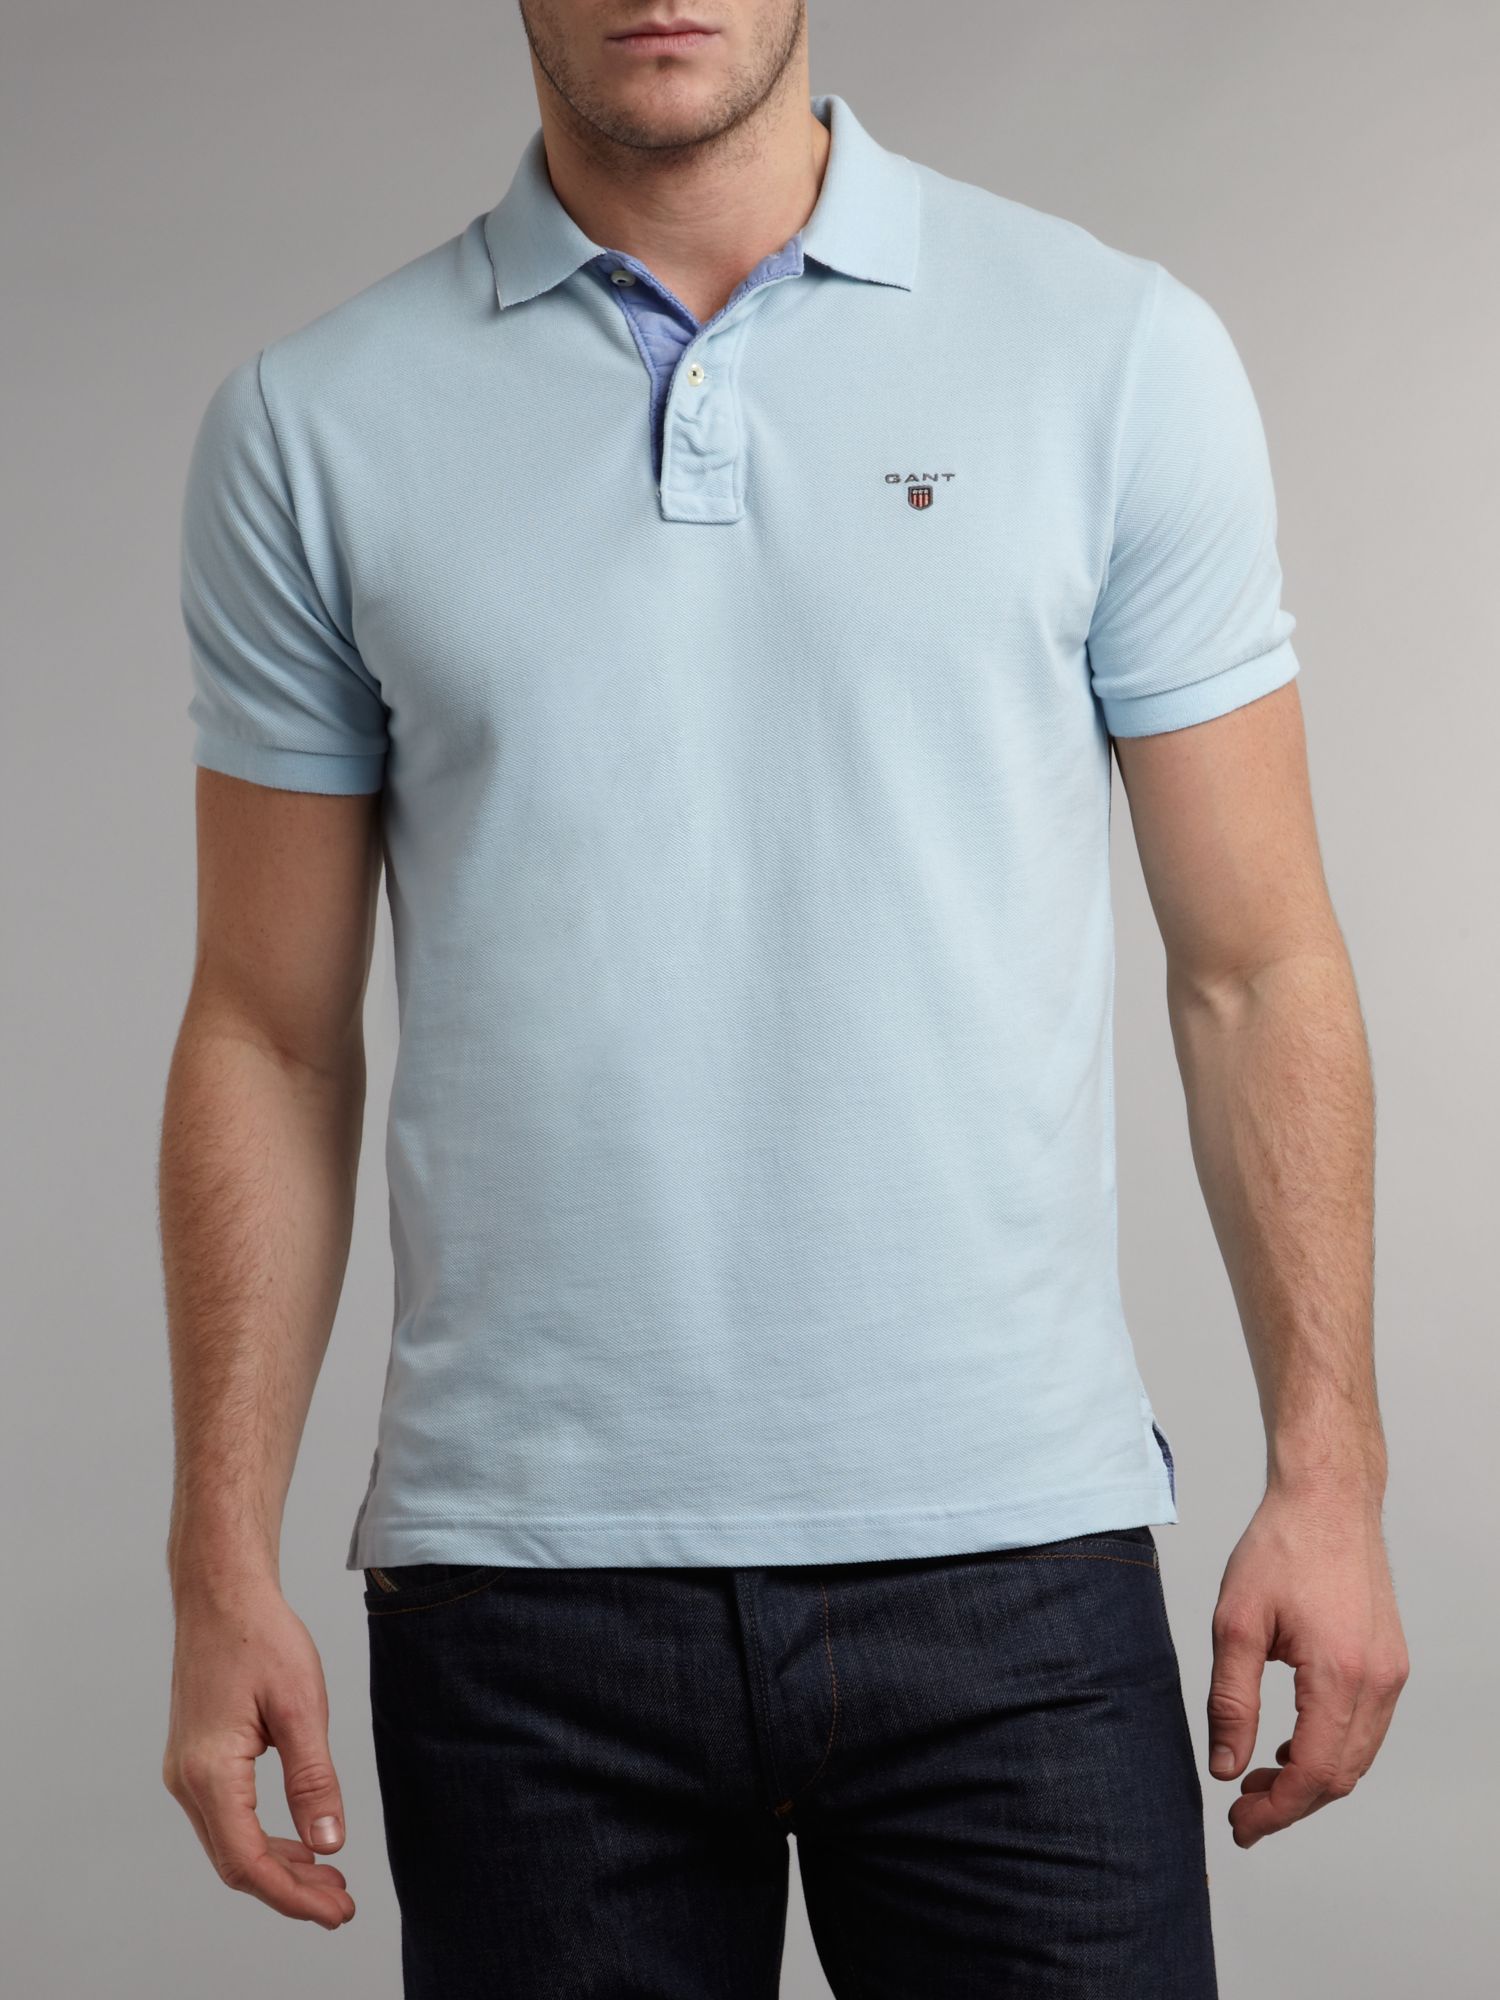 GANT Regular Fit Solid Pique Polo Shirt in Light Blue (Blue) for Men - Lyst